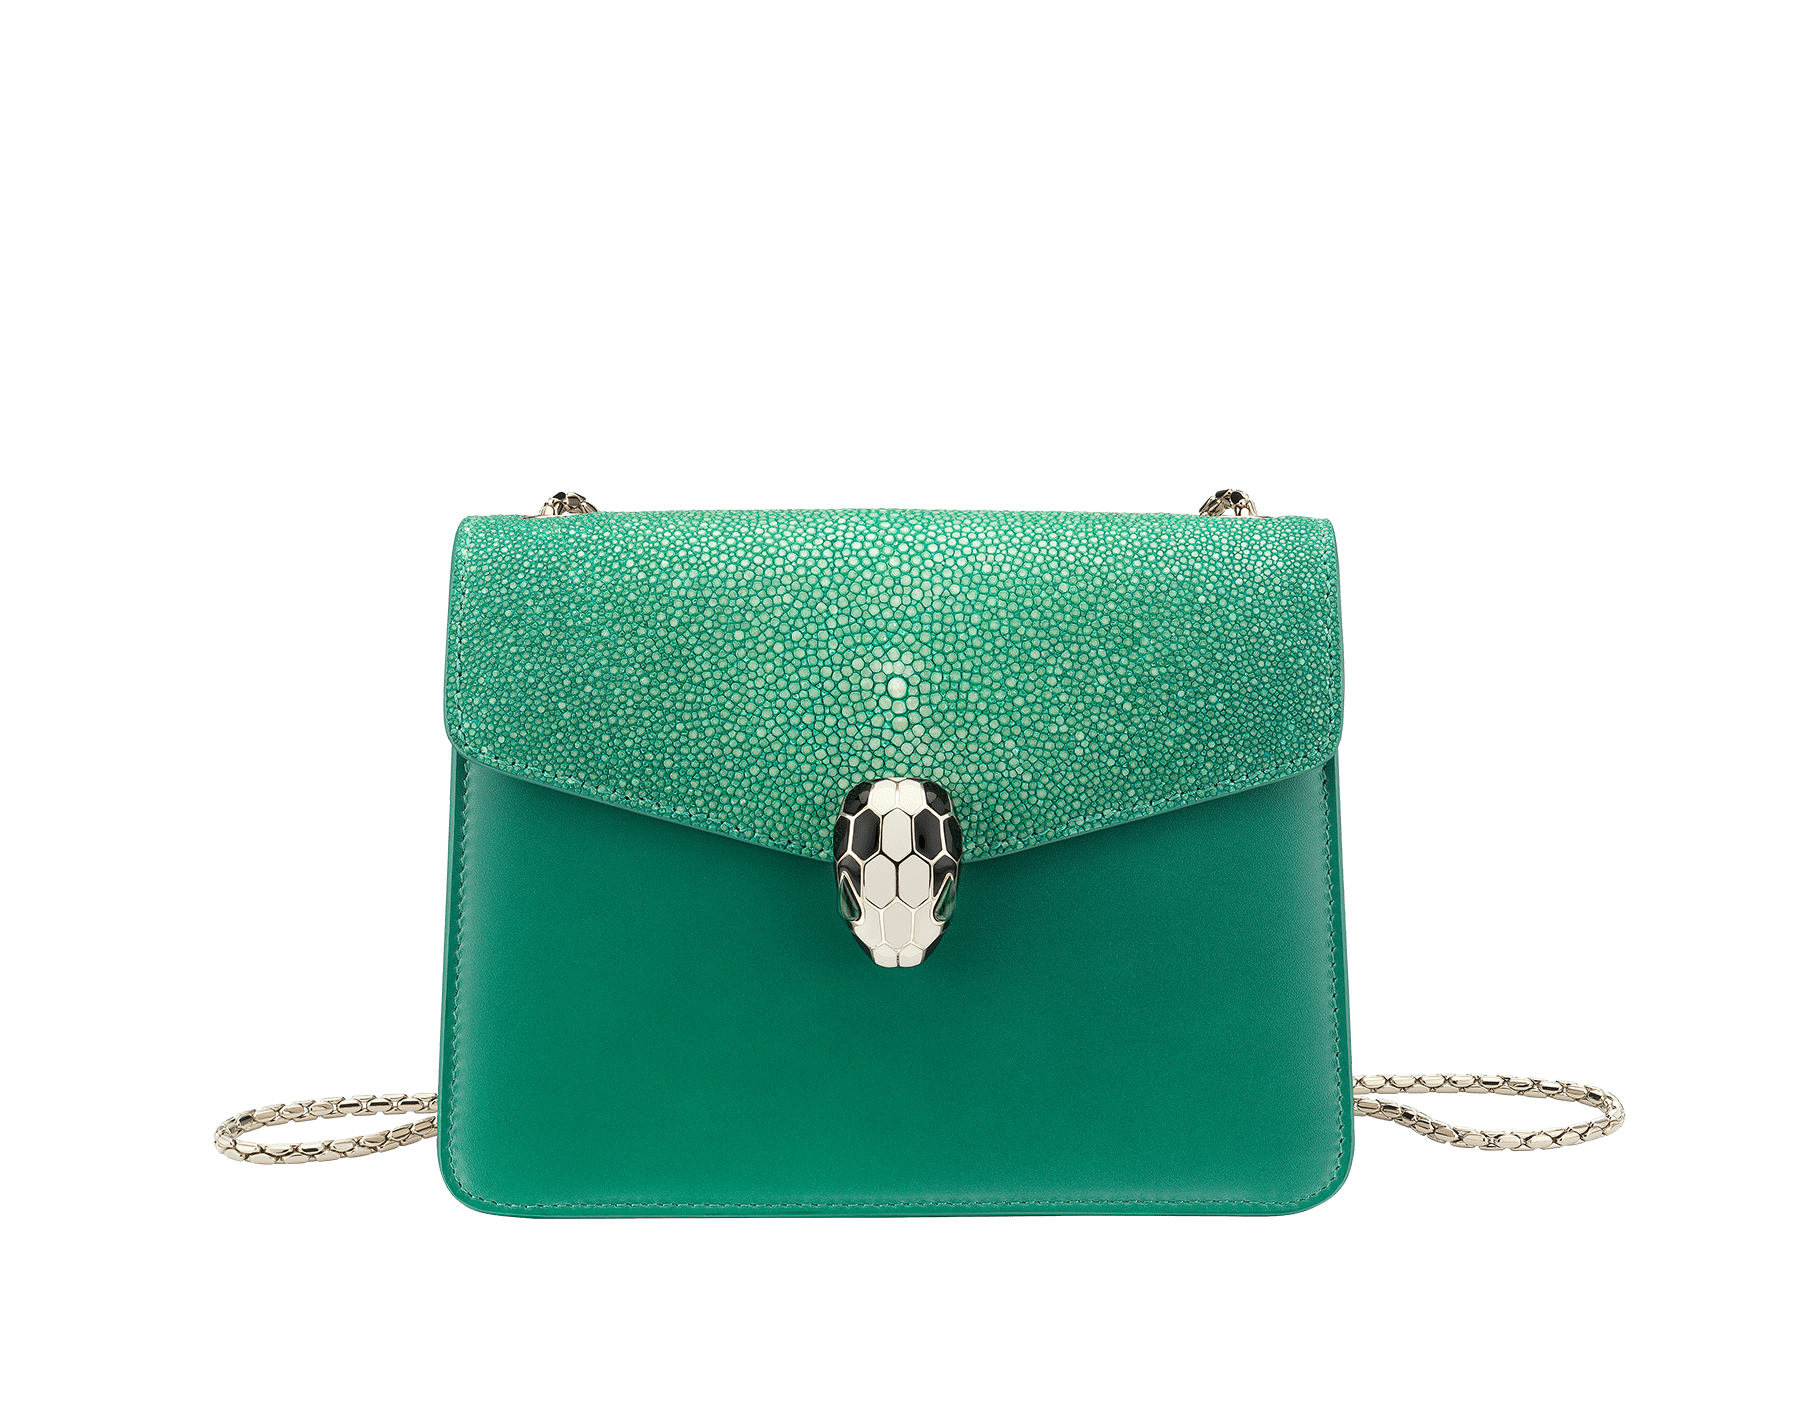 bulgari emerald green bag